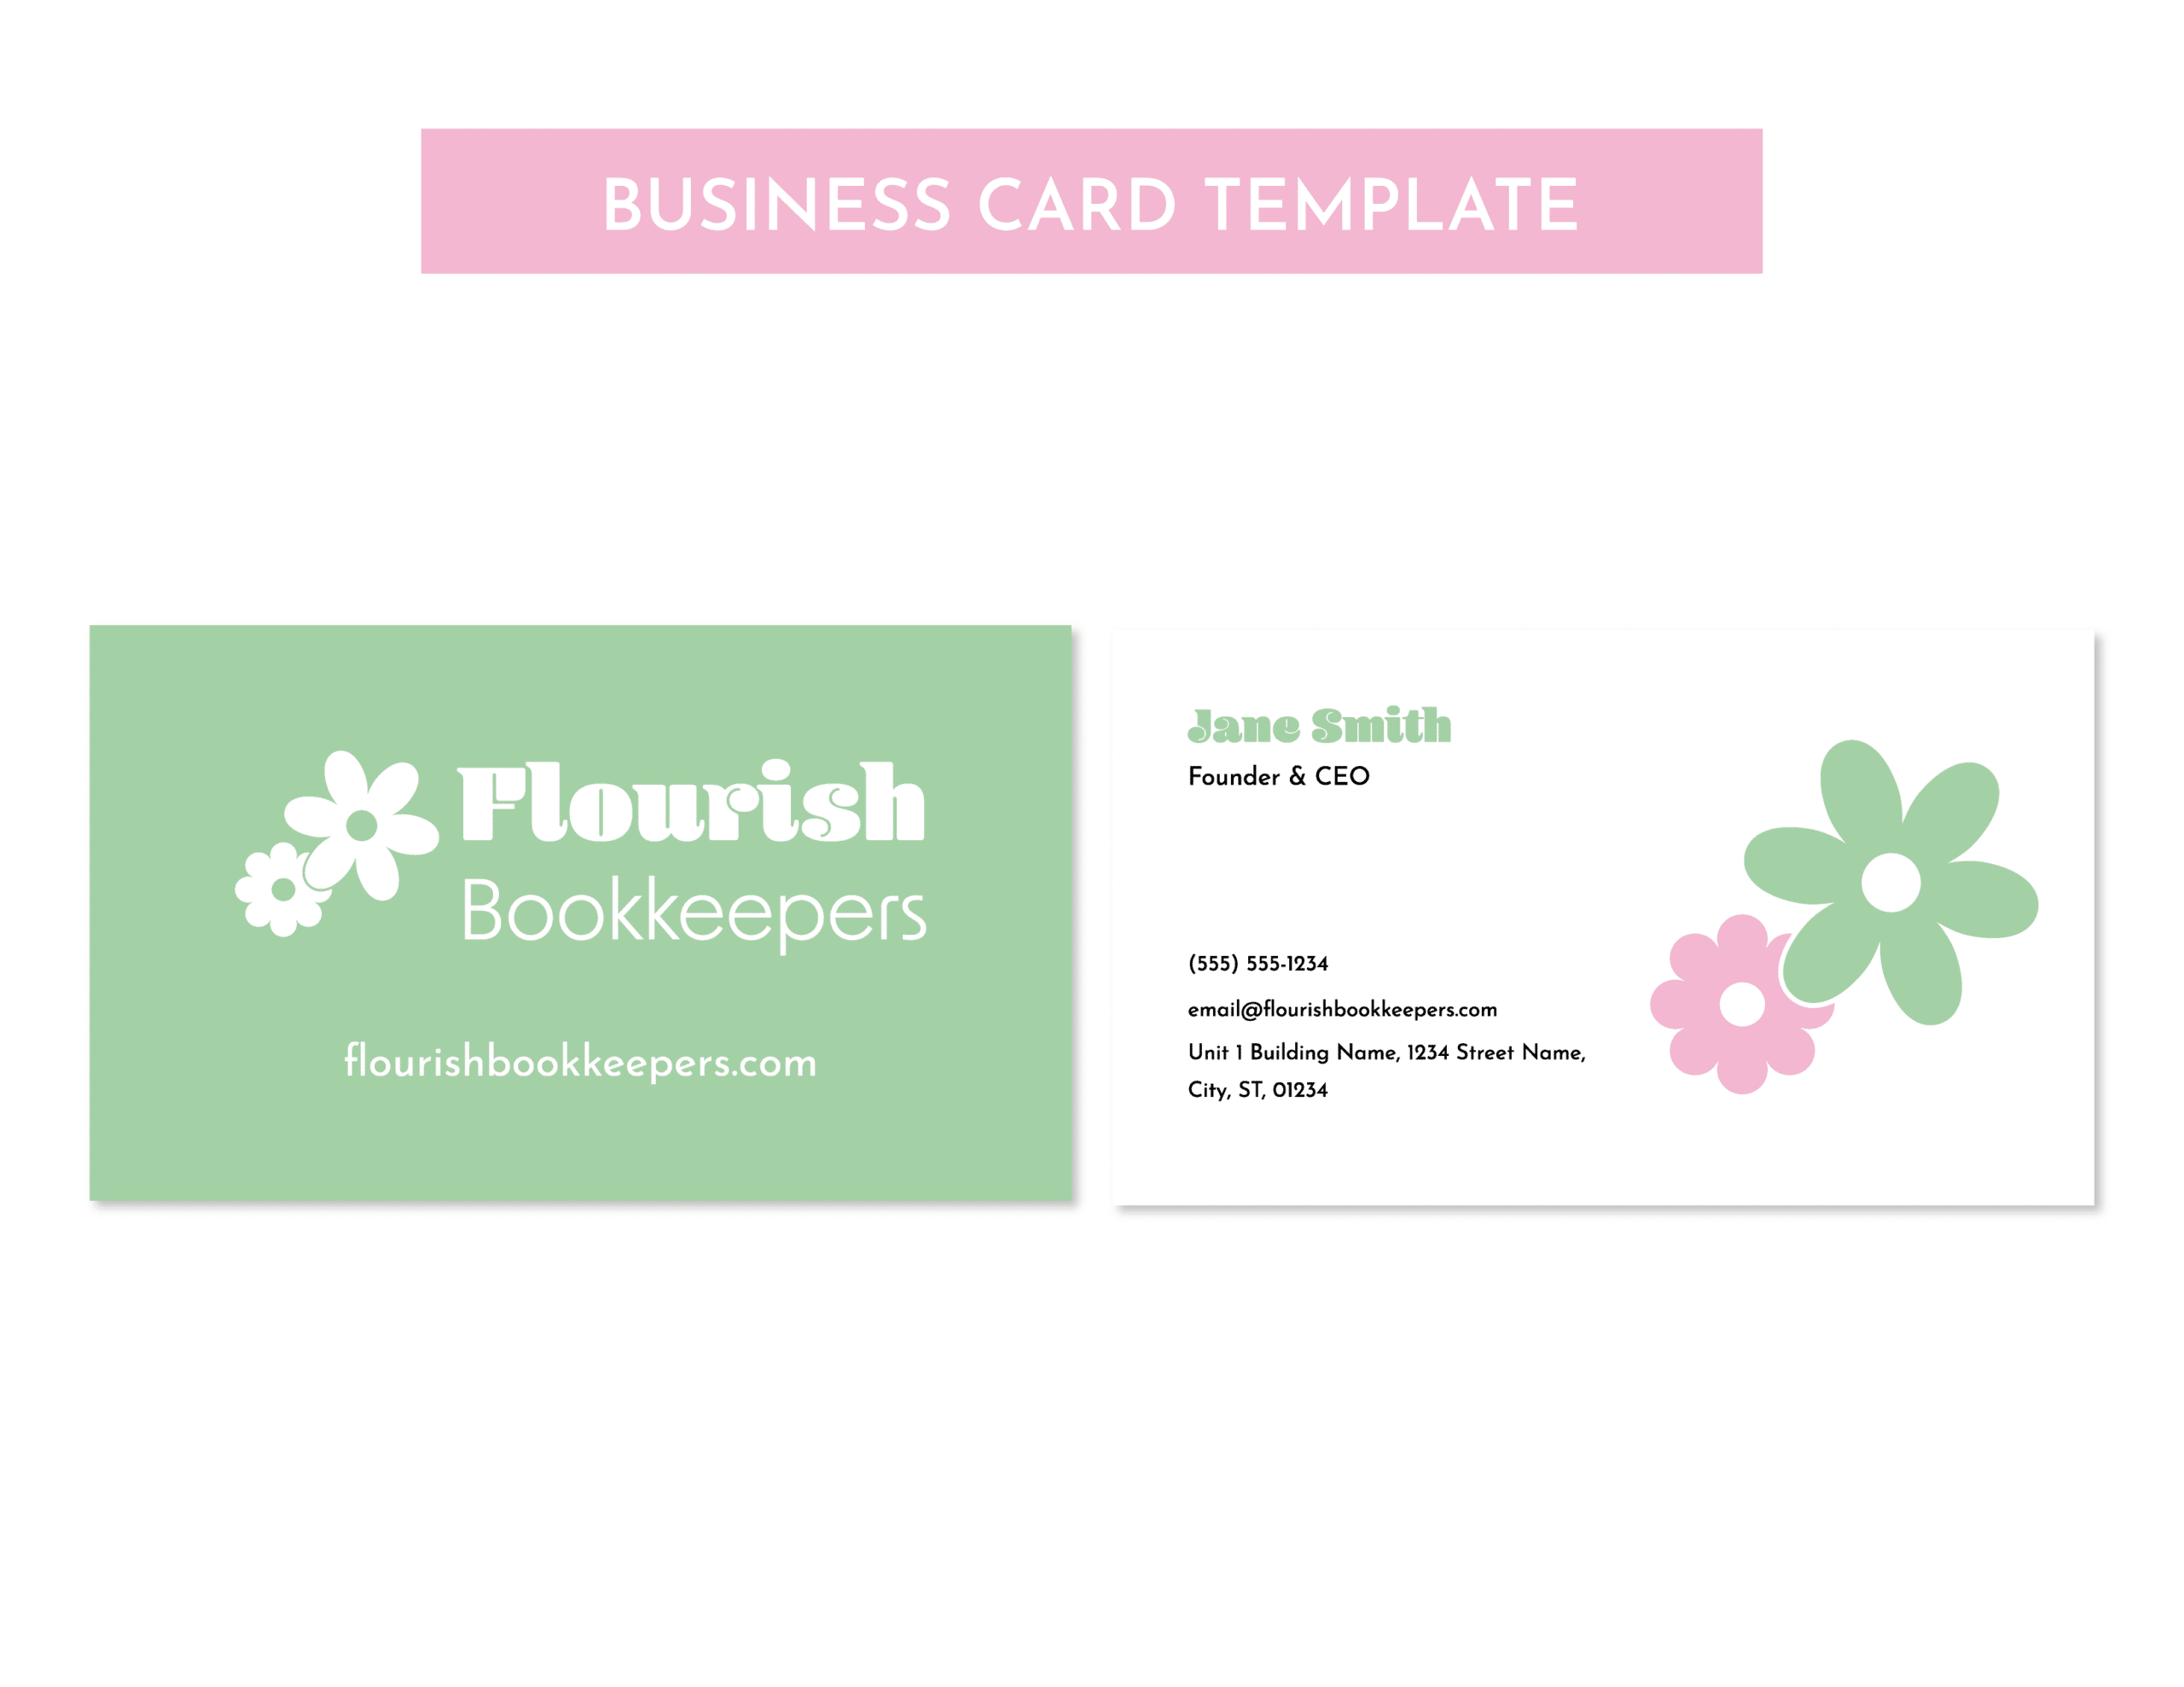 04FlourishBK_Showcase_Business Card Template